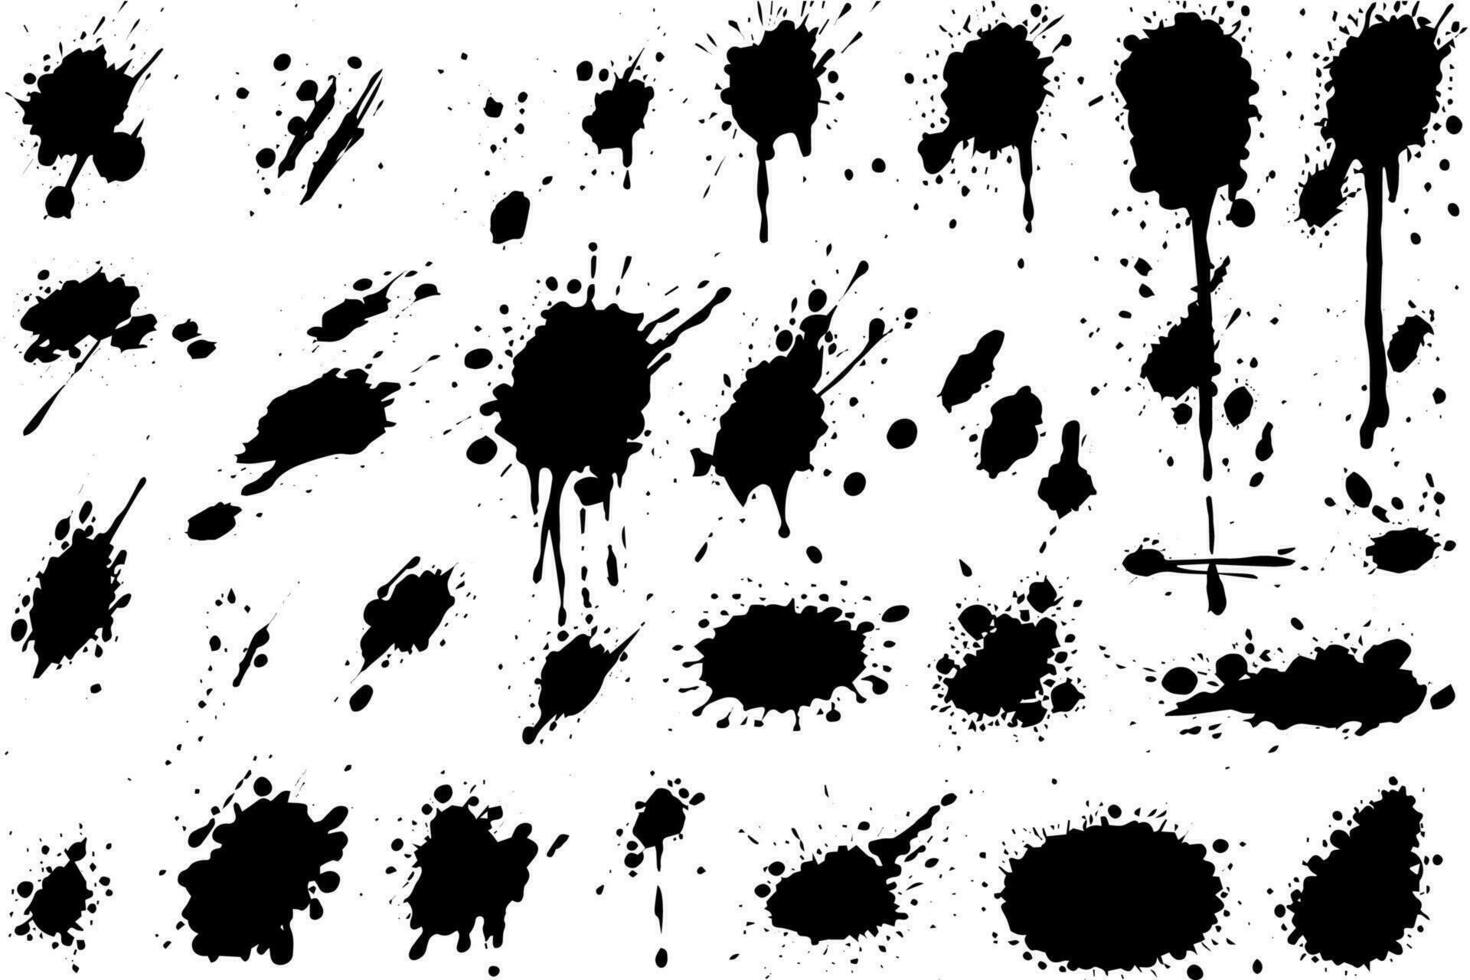 Vector set of ink splashes. Black inked splatter dirt stain splattered spray splash with drops blots isolated.